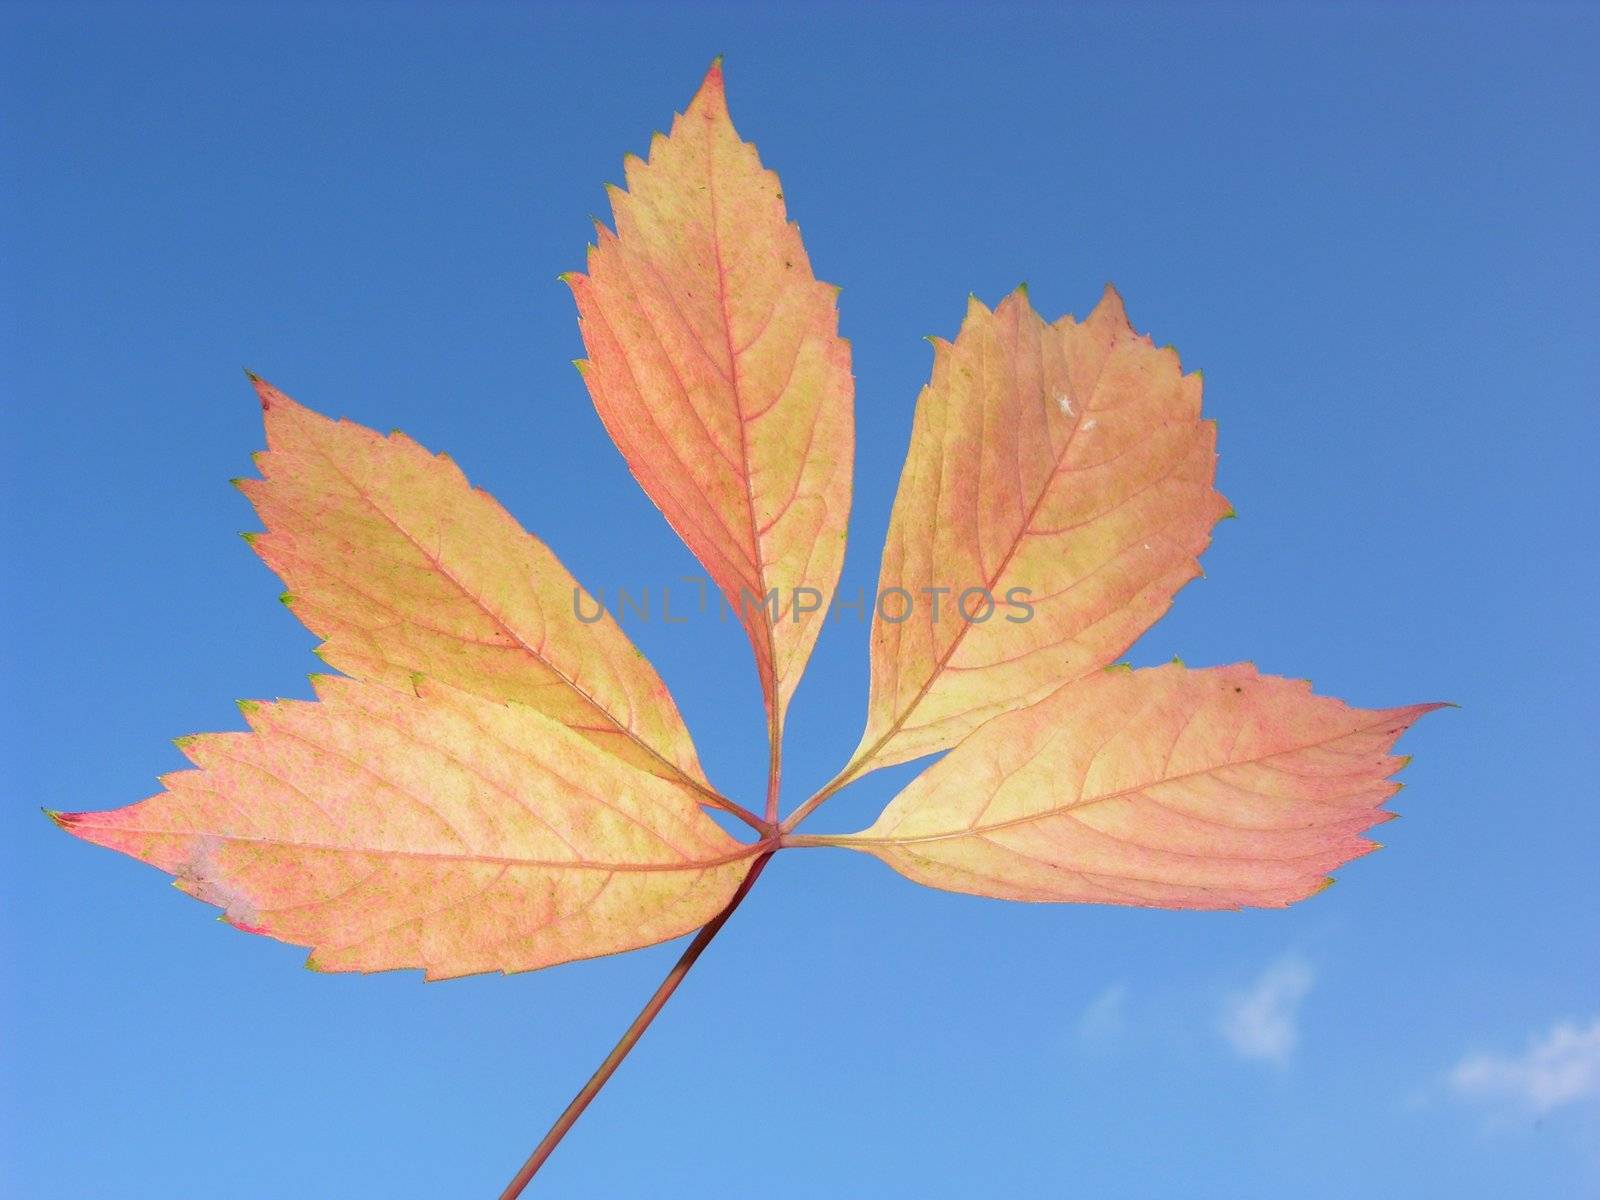 Blue sky and fall leaf by rbiedermann